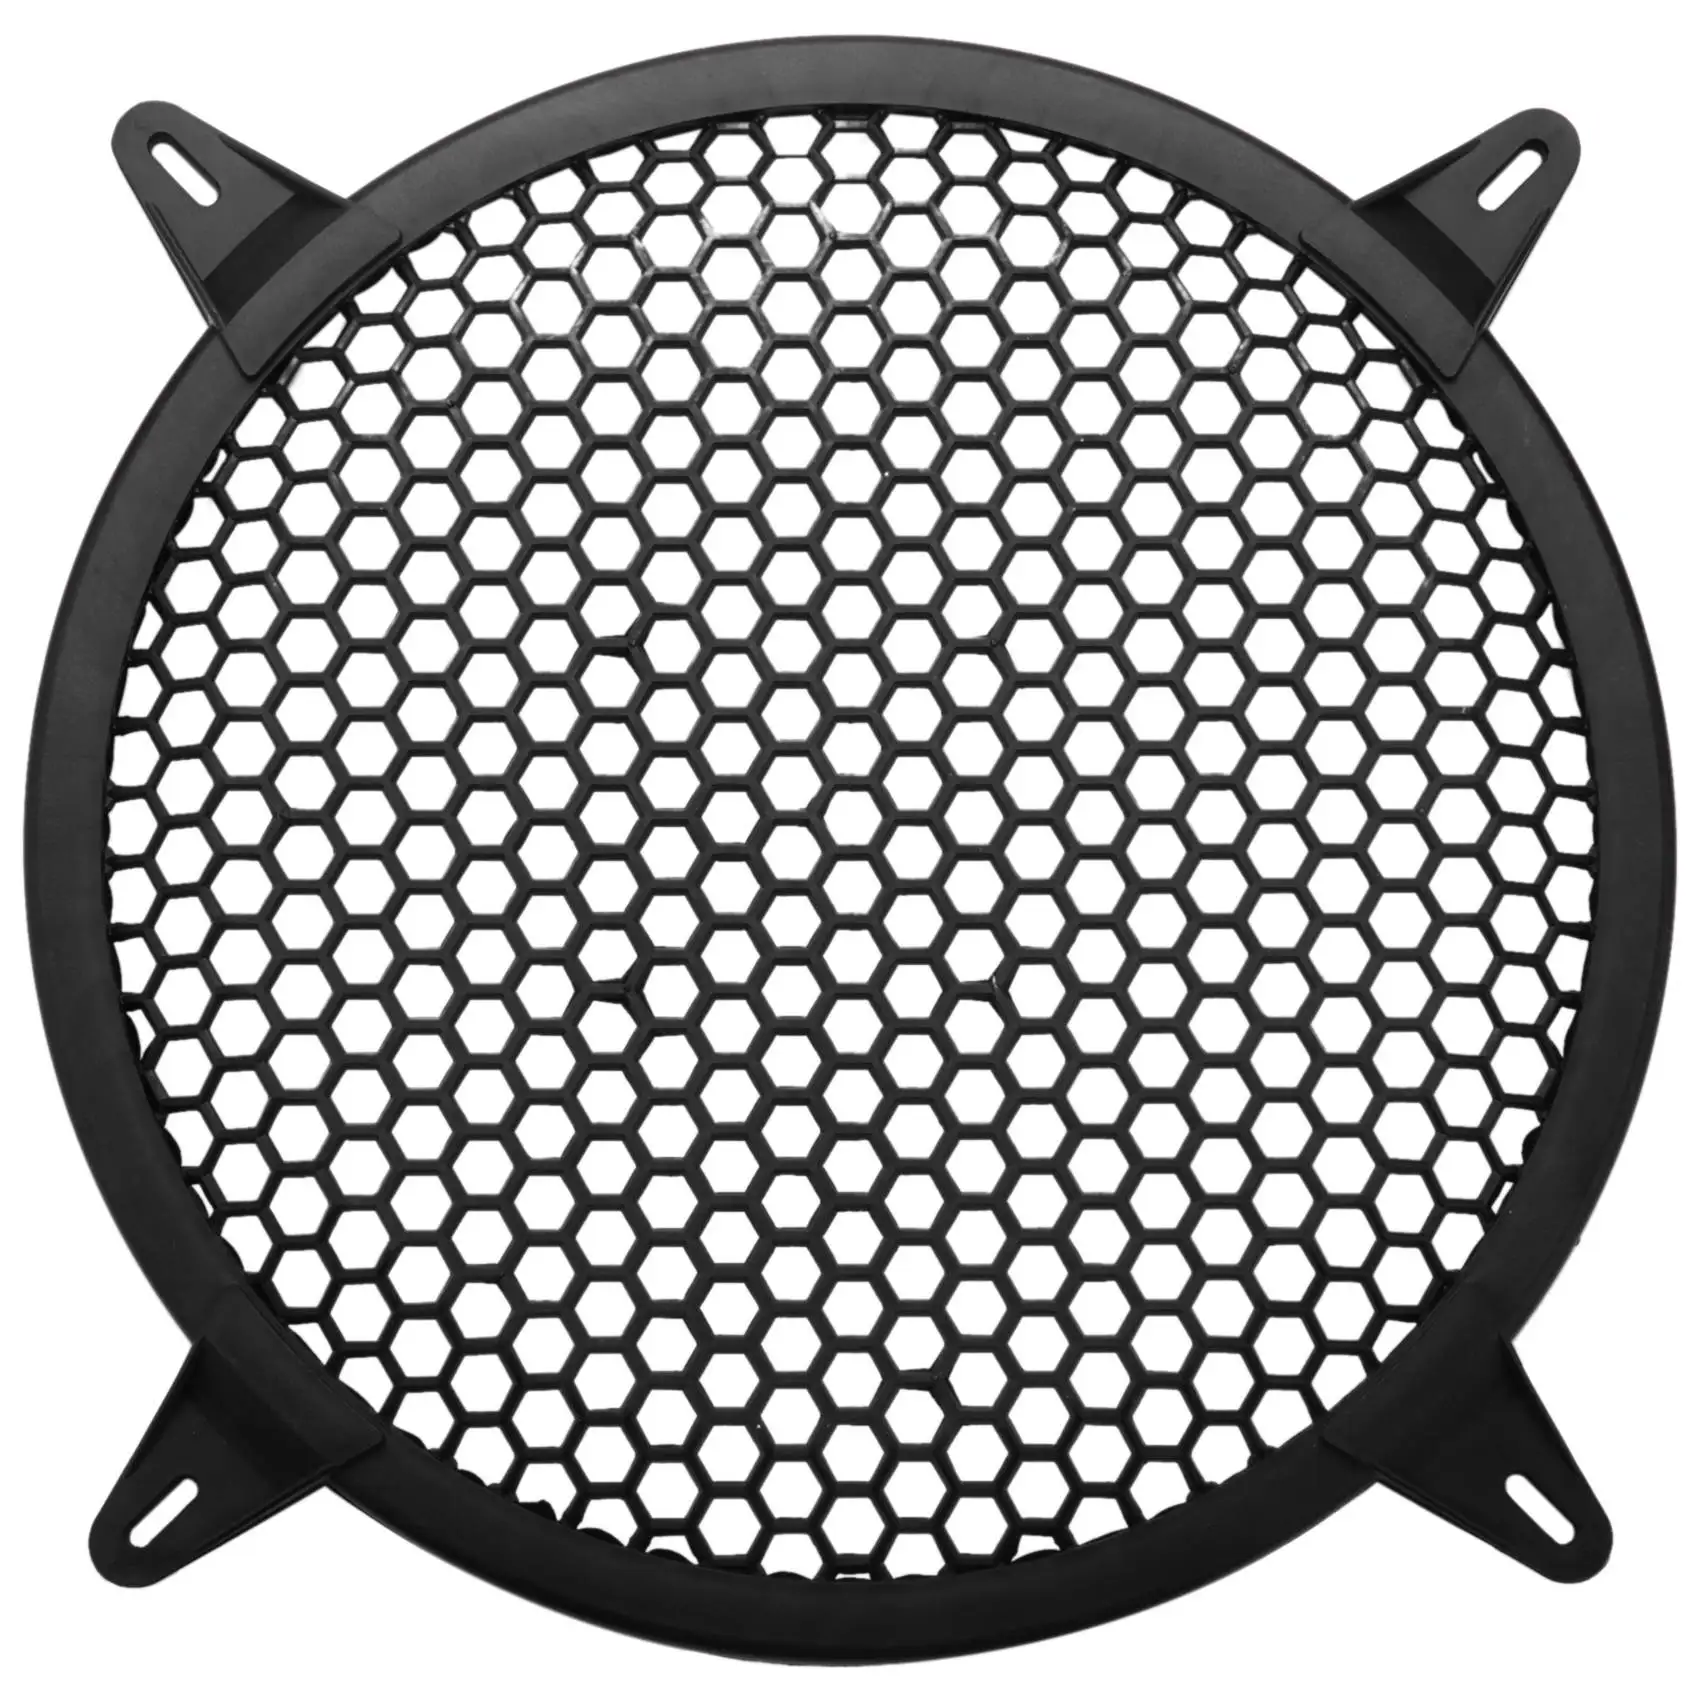 

Subwoofer Grid Car Speaker Amplifier Grill Cover Mesh - 10 Inch